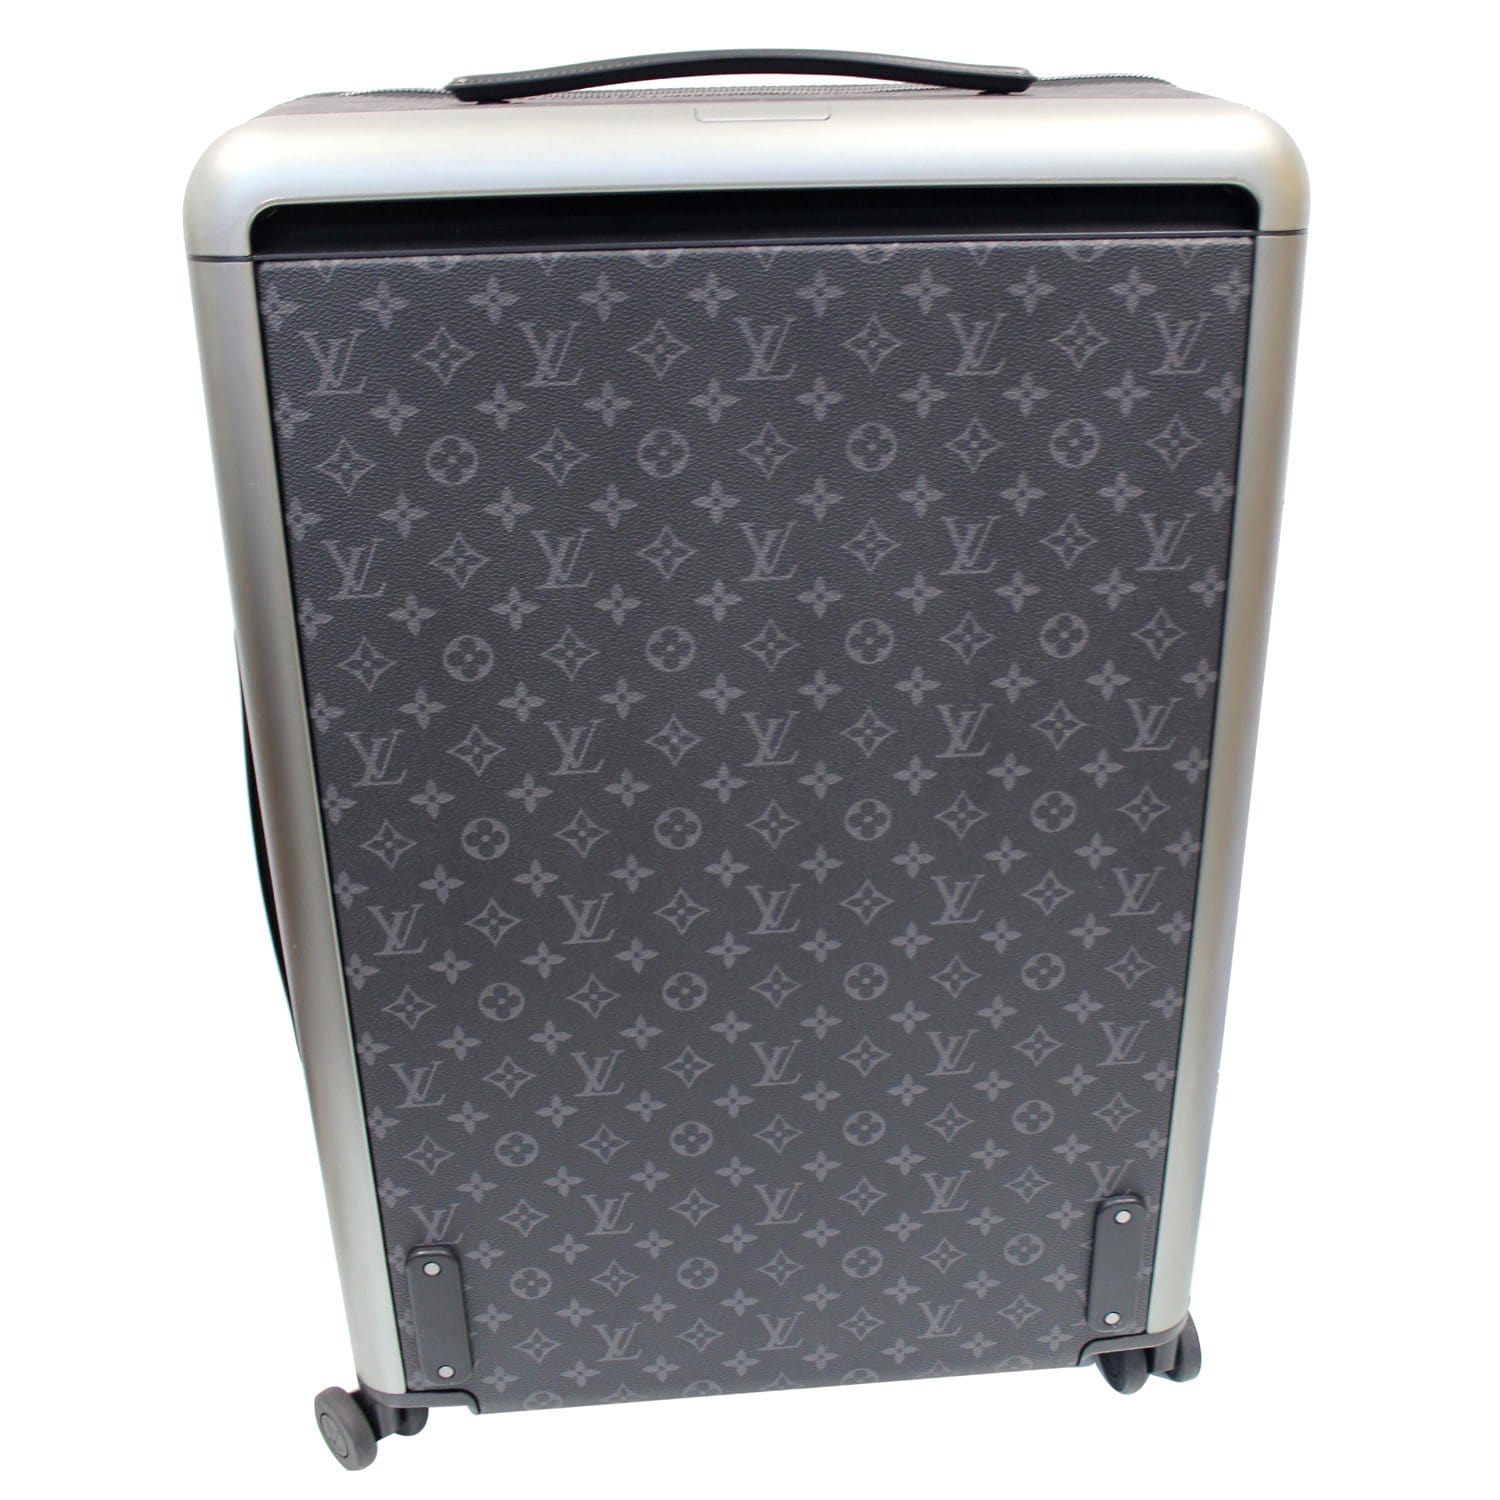 Designer Suitcase Horizon 70 - Checked Luggage